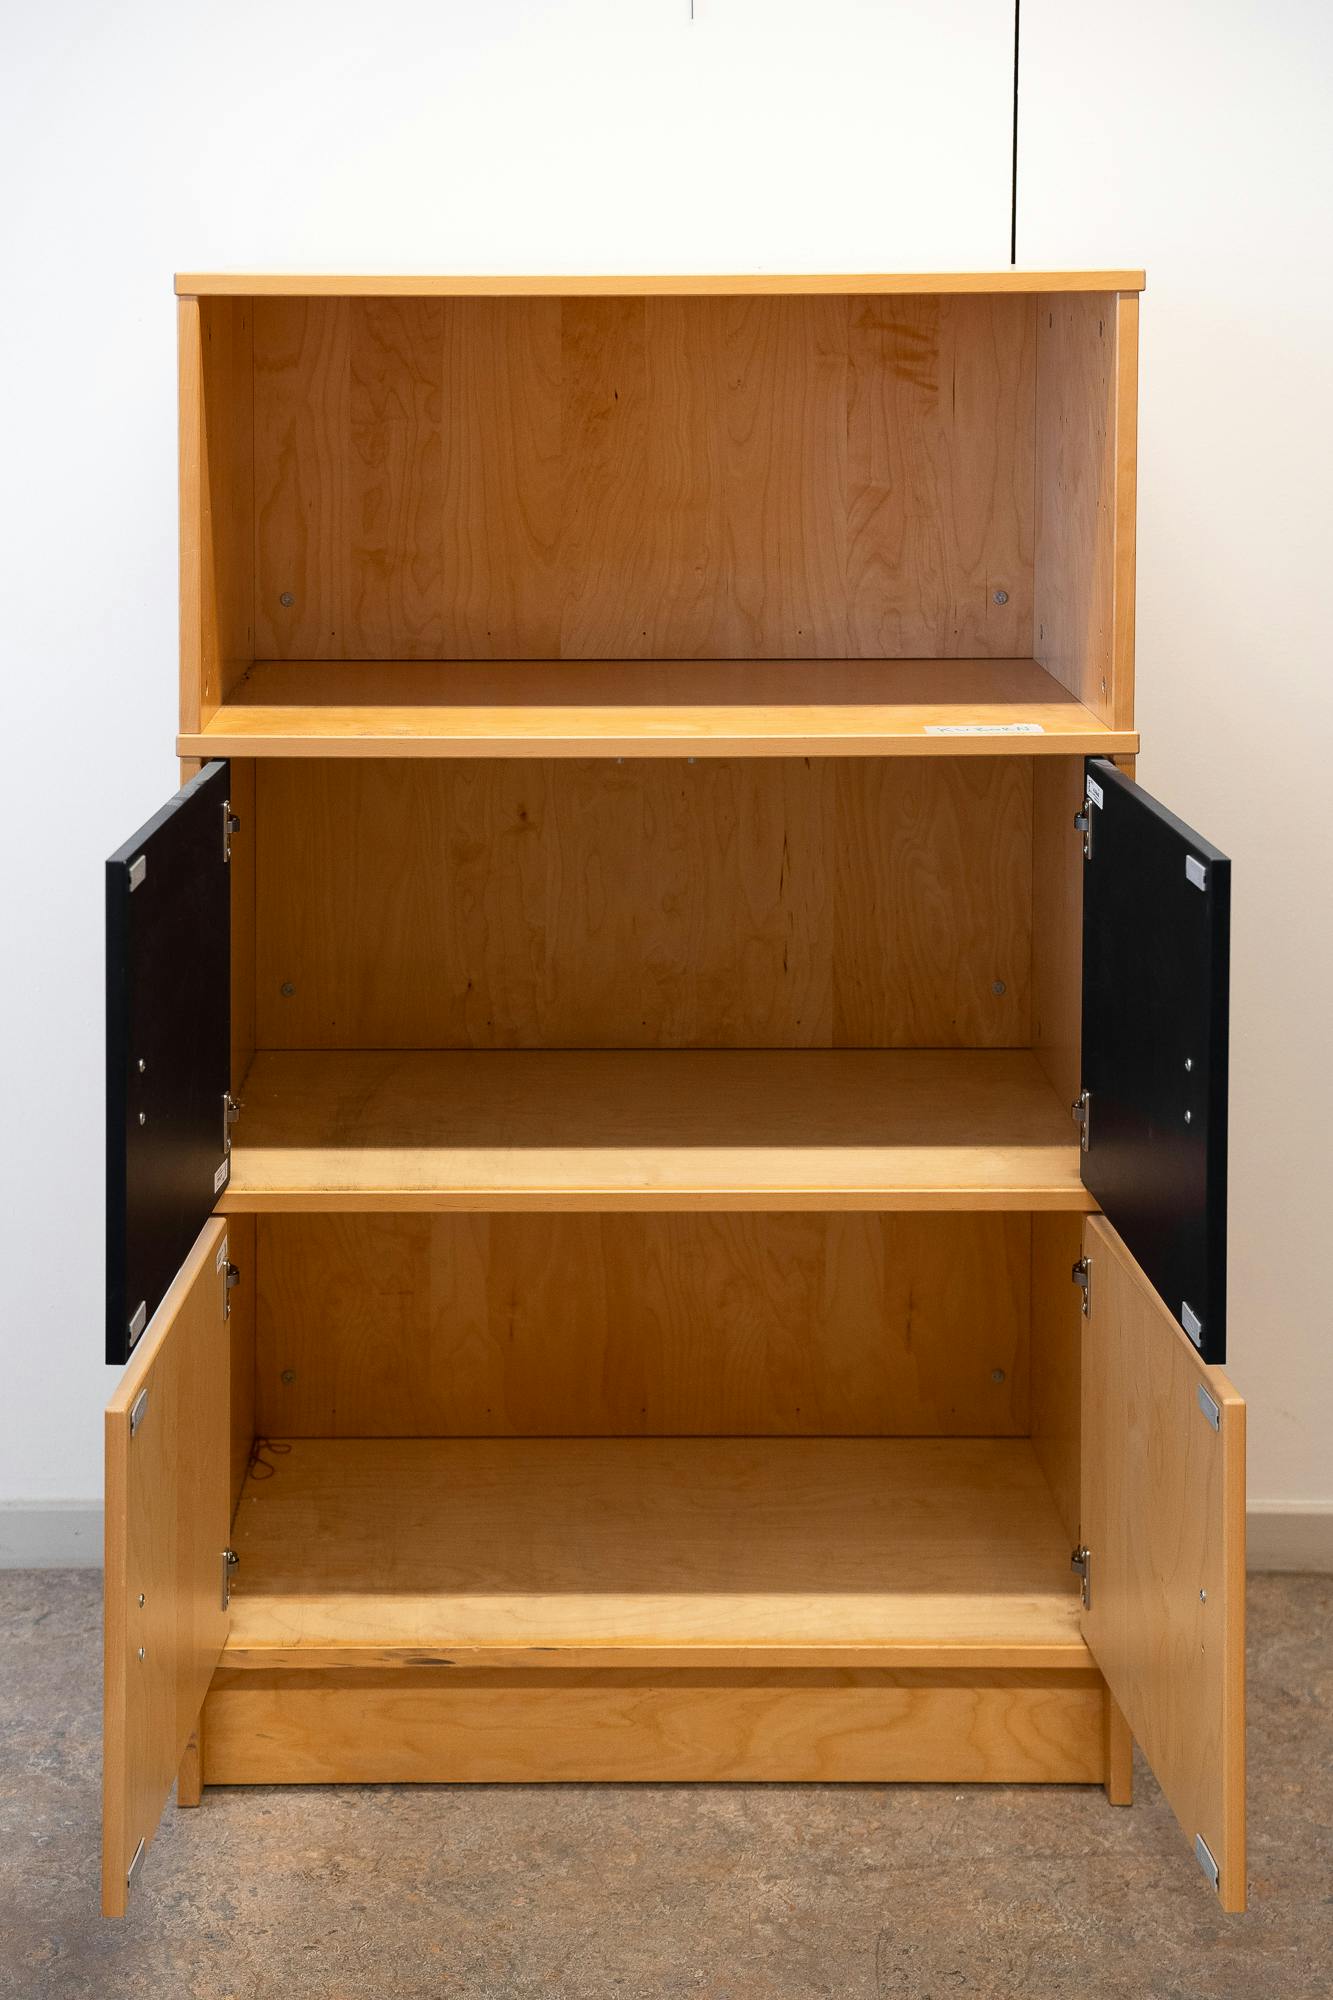 ikea wooden wardrobe - Second hand quality "Storage" - Relieve Furniture